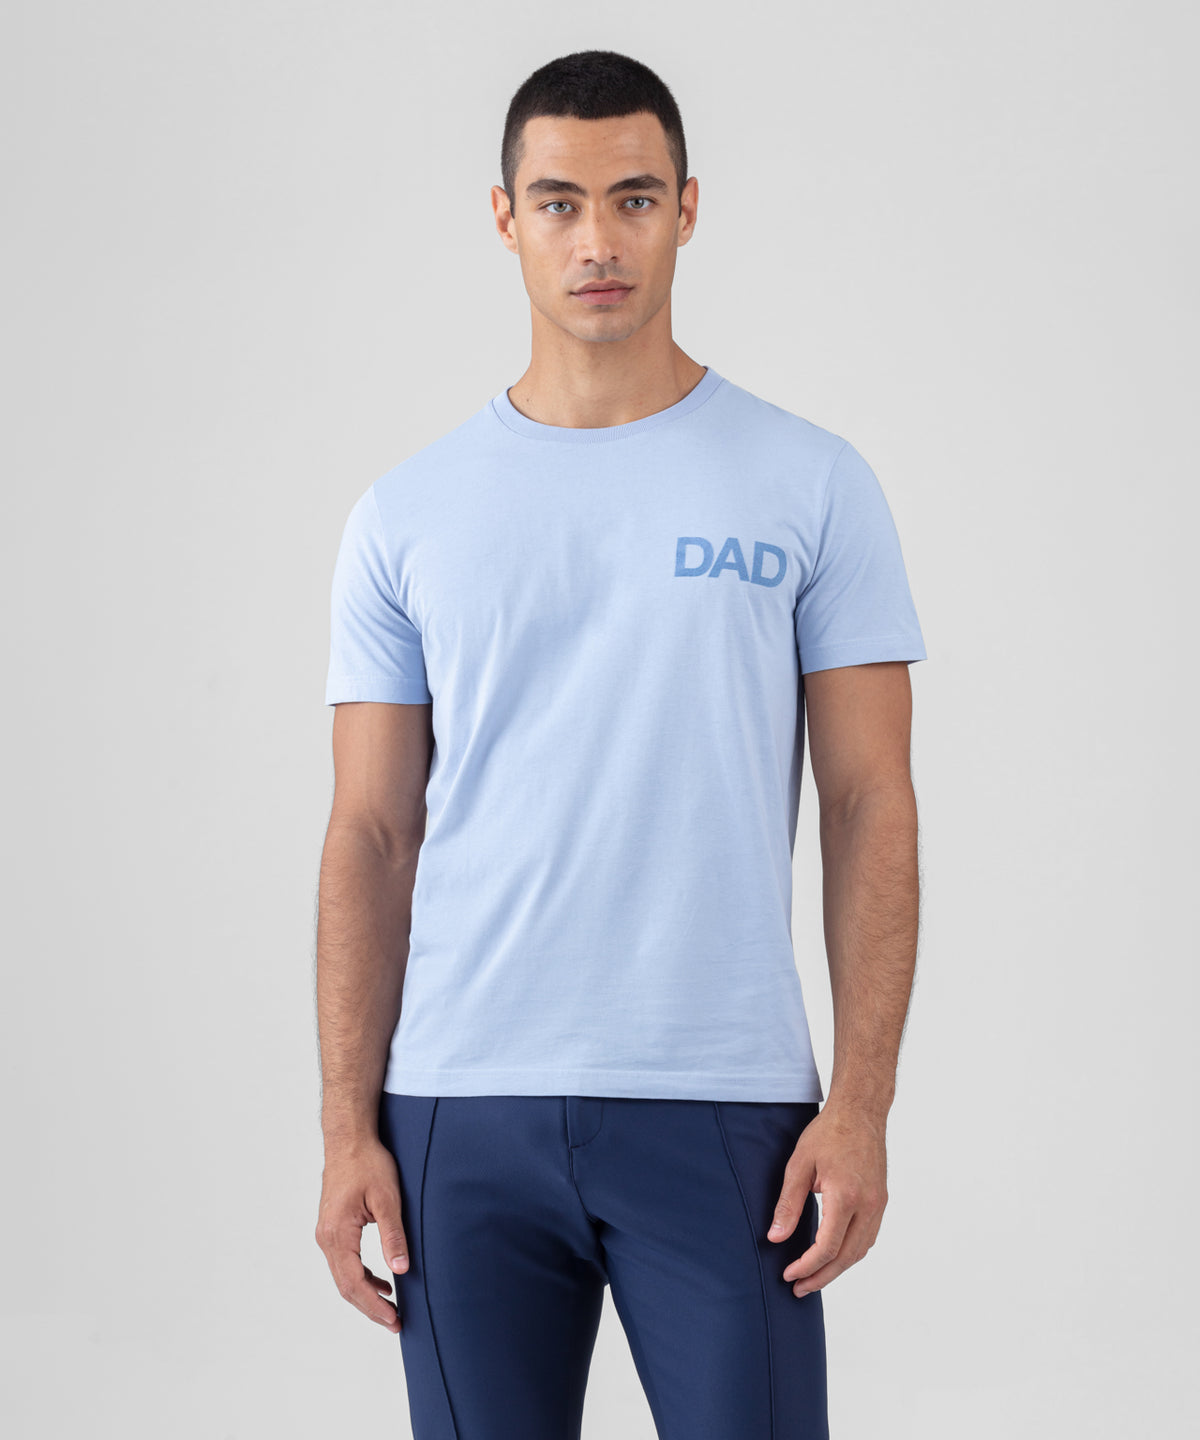 T-shirt en coton organique à imprimé DAD: Bleu ciel